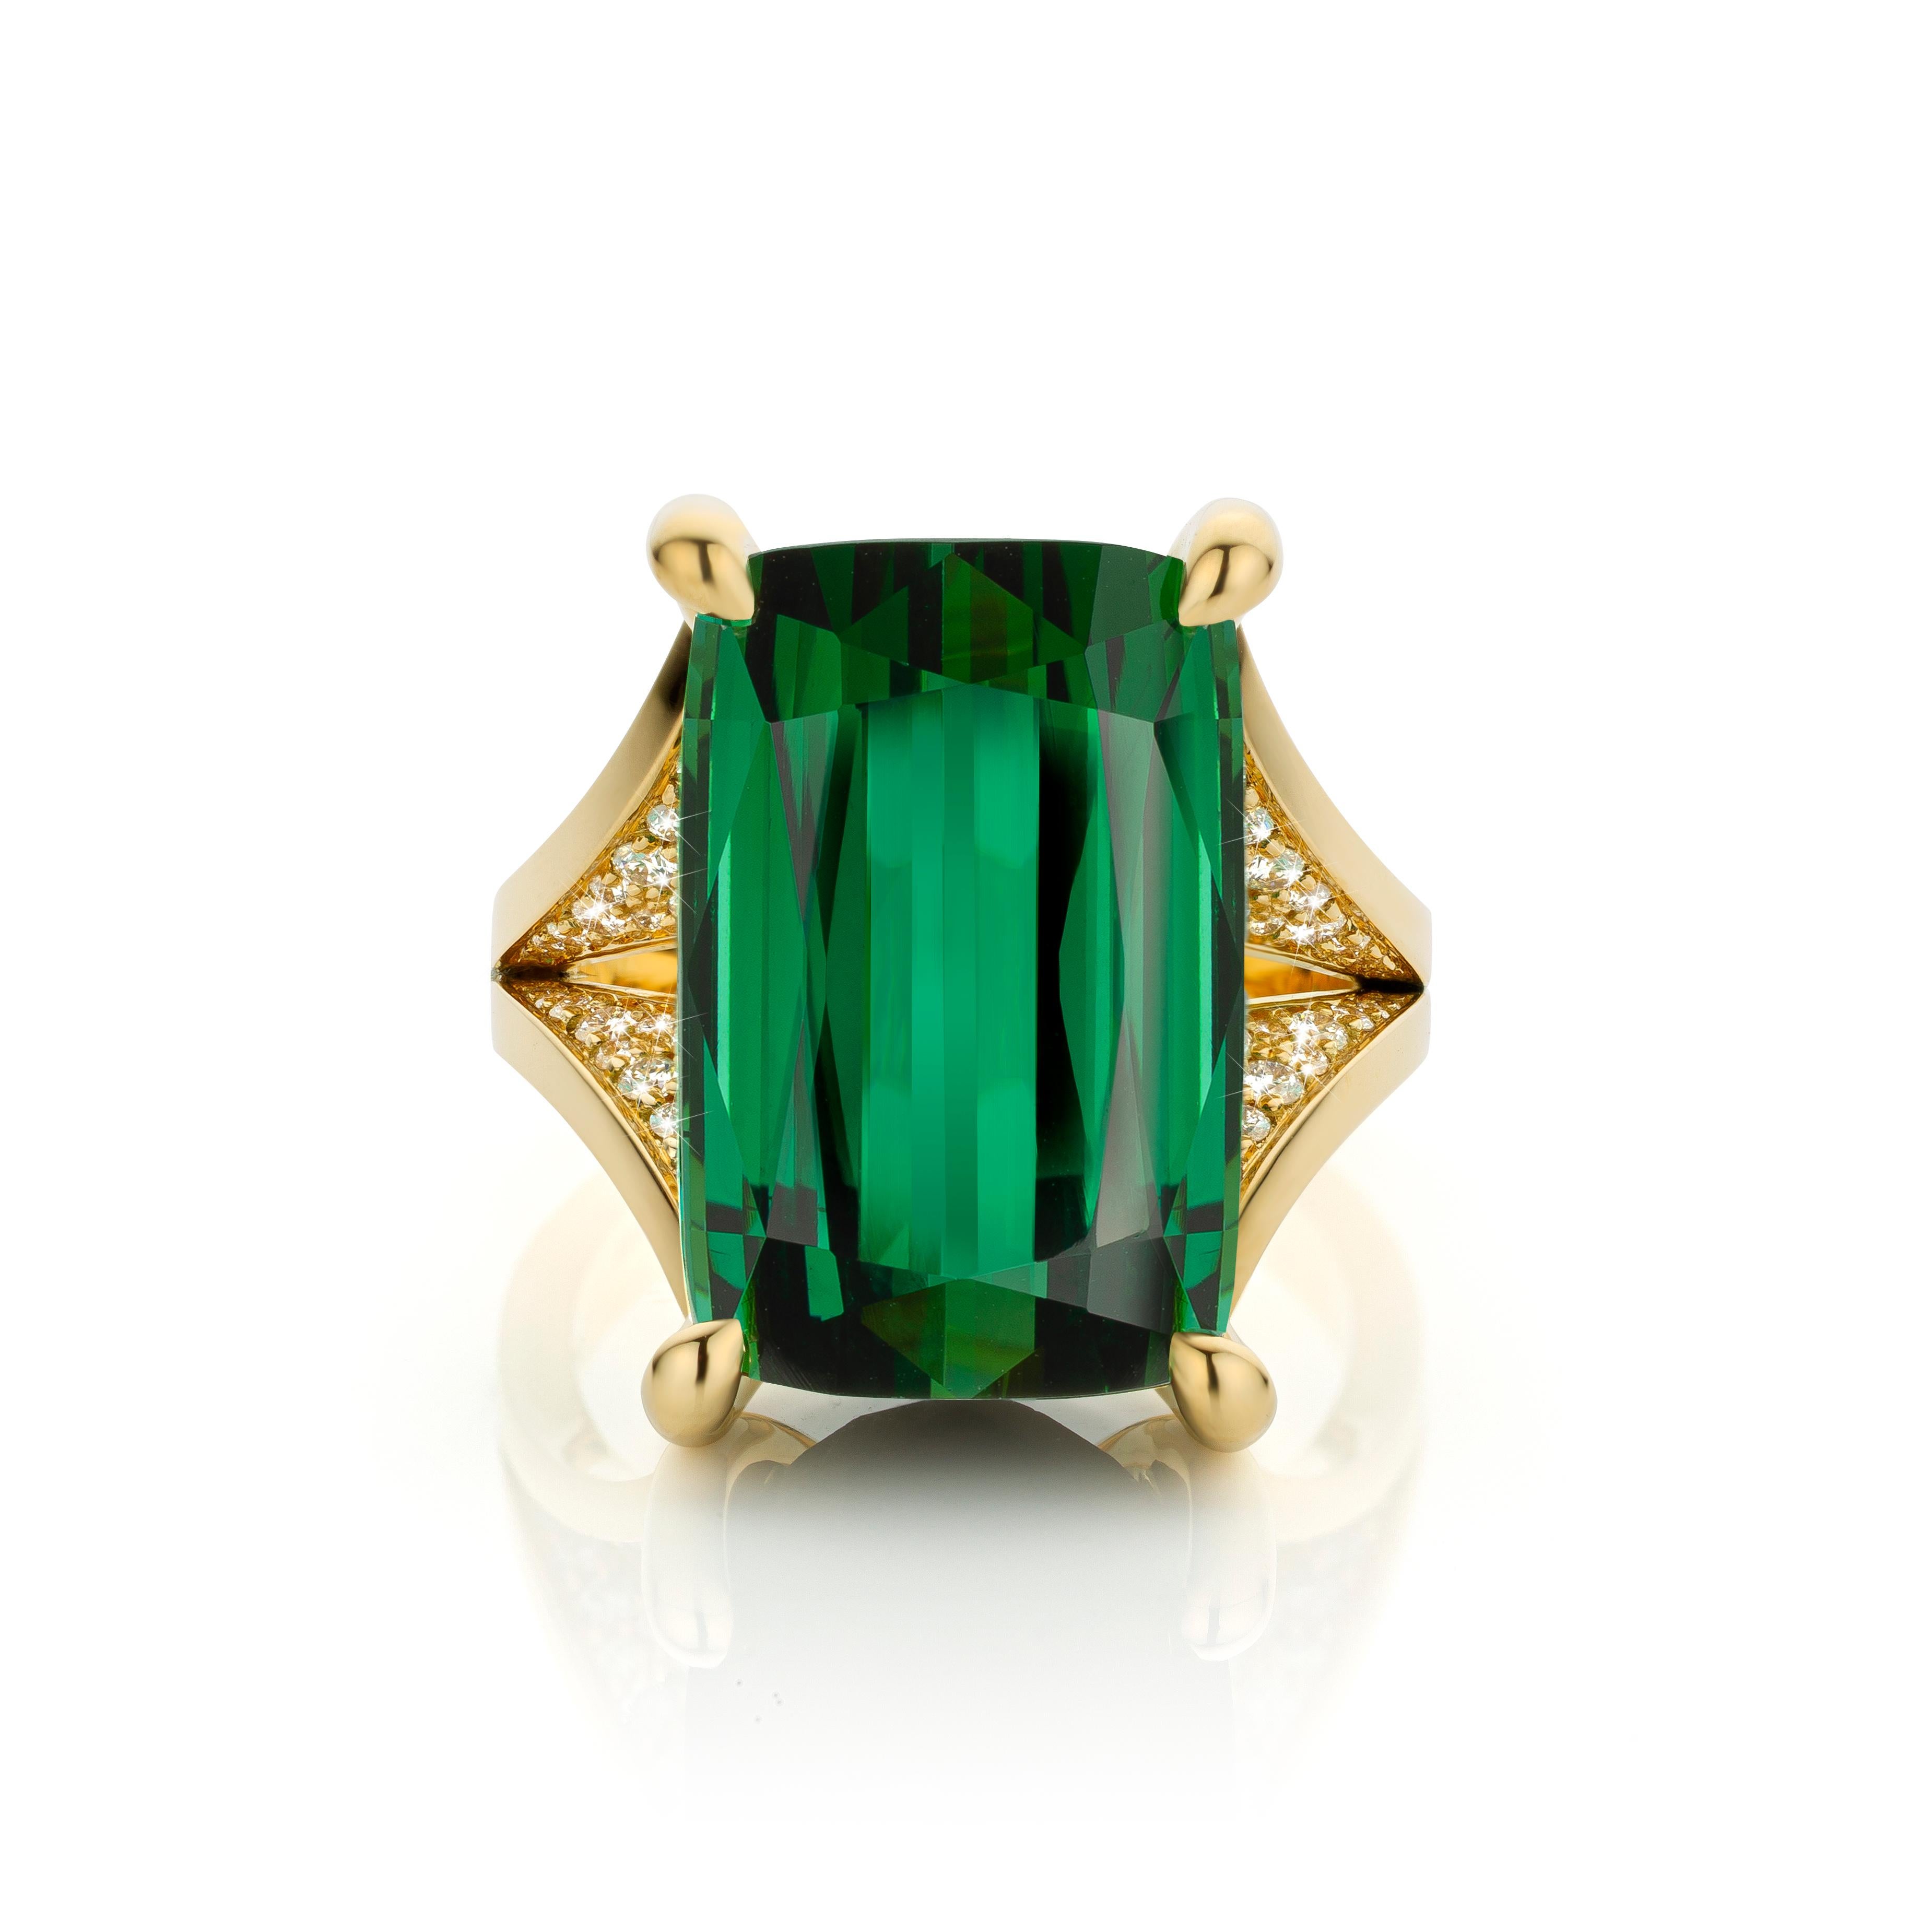 Cober Atemberaubendes Grün mit 8,09 Karat Turmalin und 56 Diamanten Mode-Ring Damen im Angebot